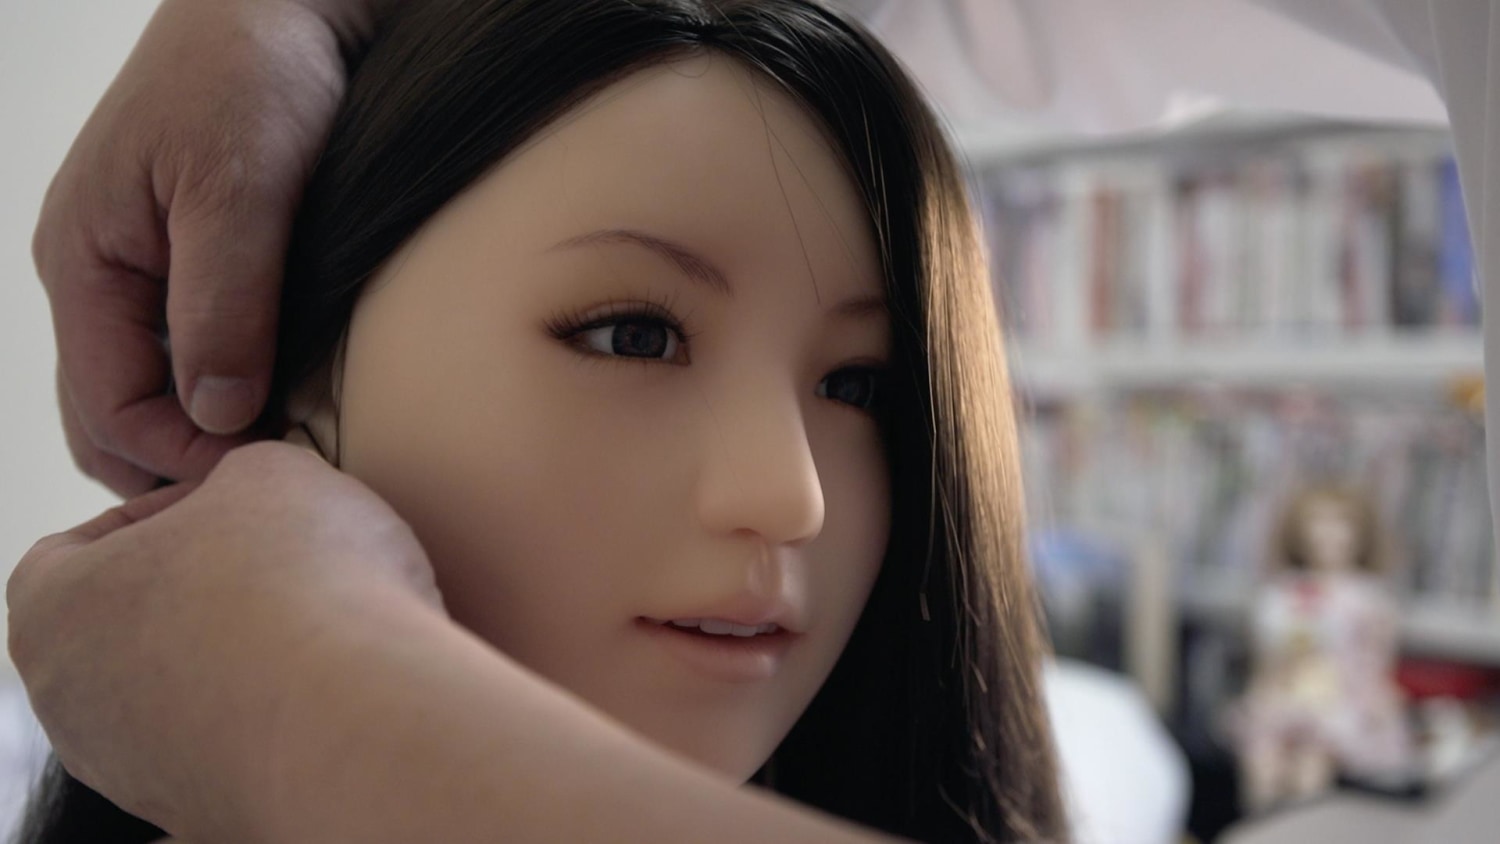 Sola Saal Ke Baccho Ki Xxx Video - Japanese men find love with sex dolls